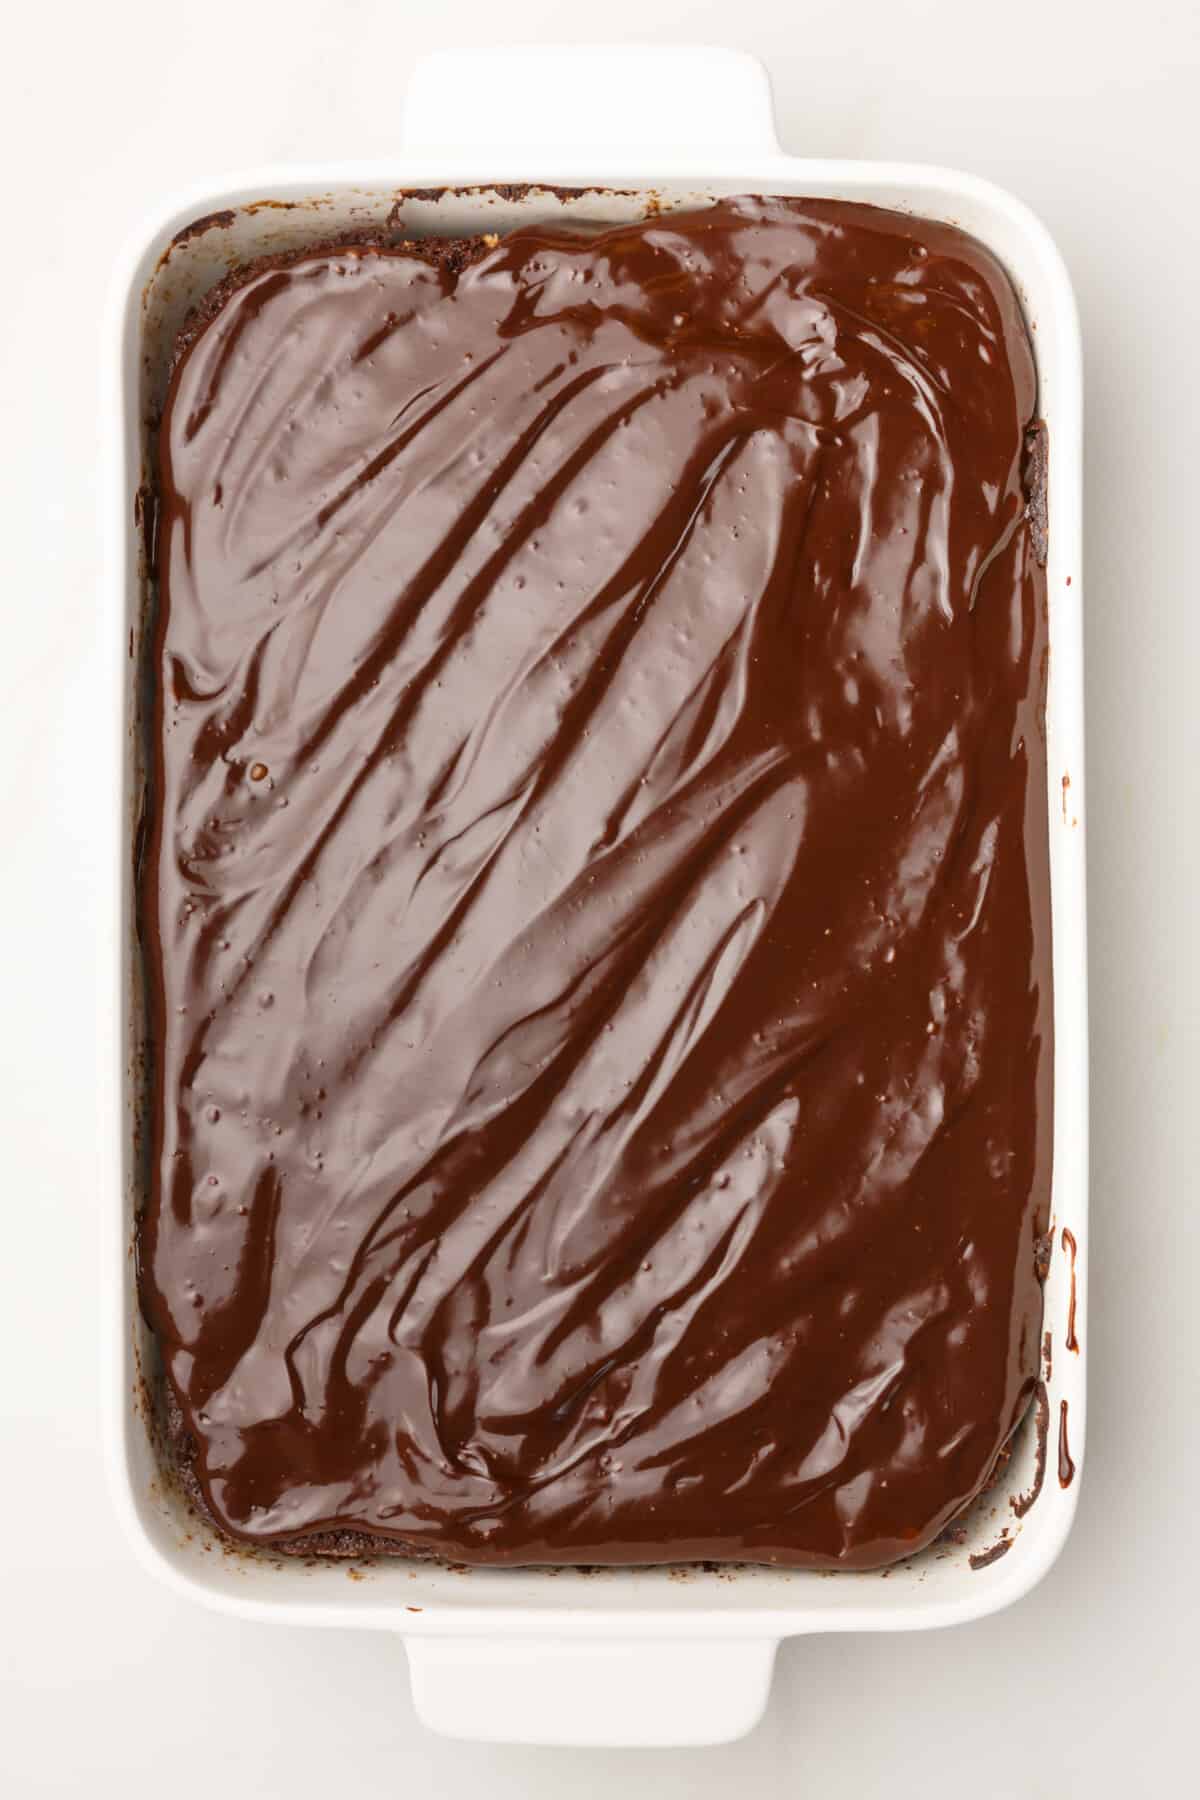 chocolate ganache spread on top of chocolate zucchini cake sitting in a 9x13 baking dish